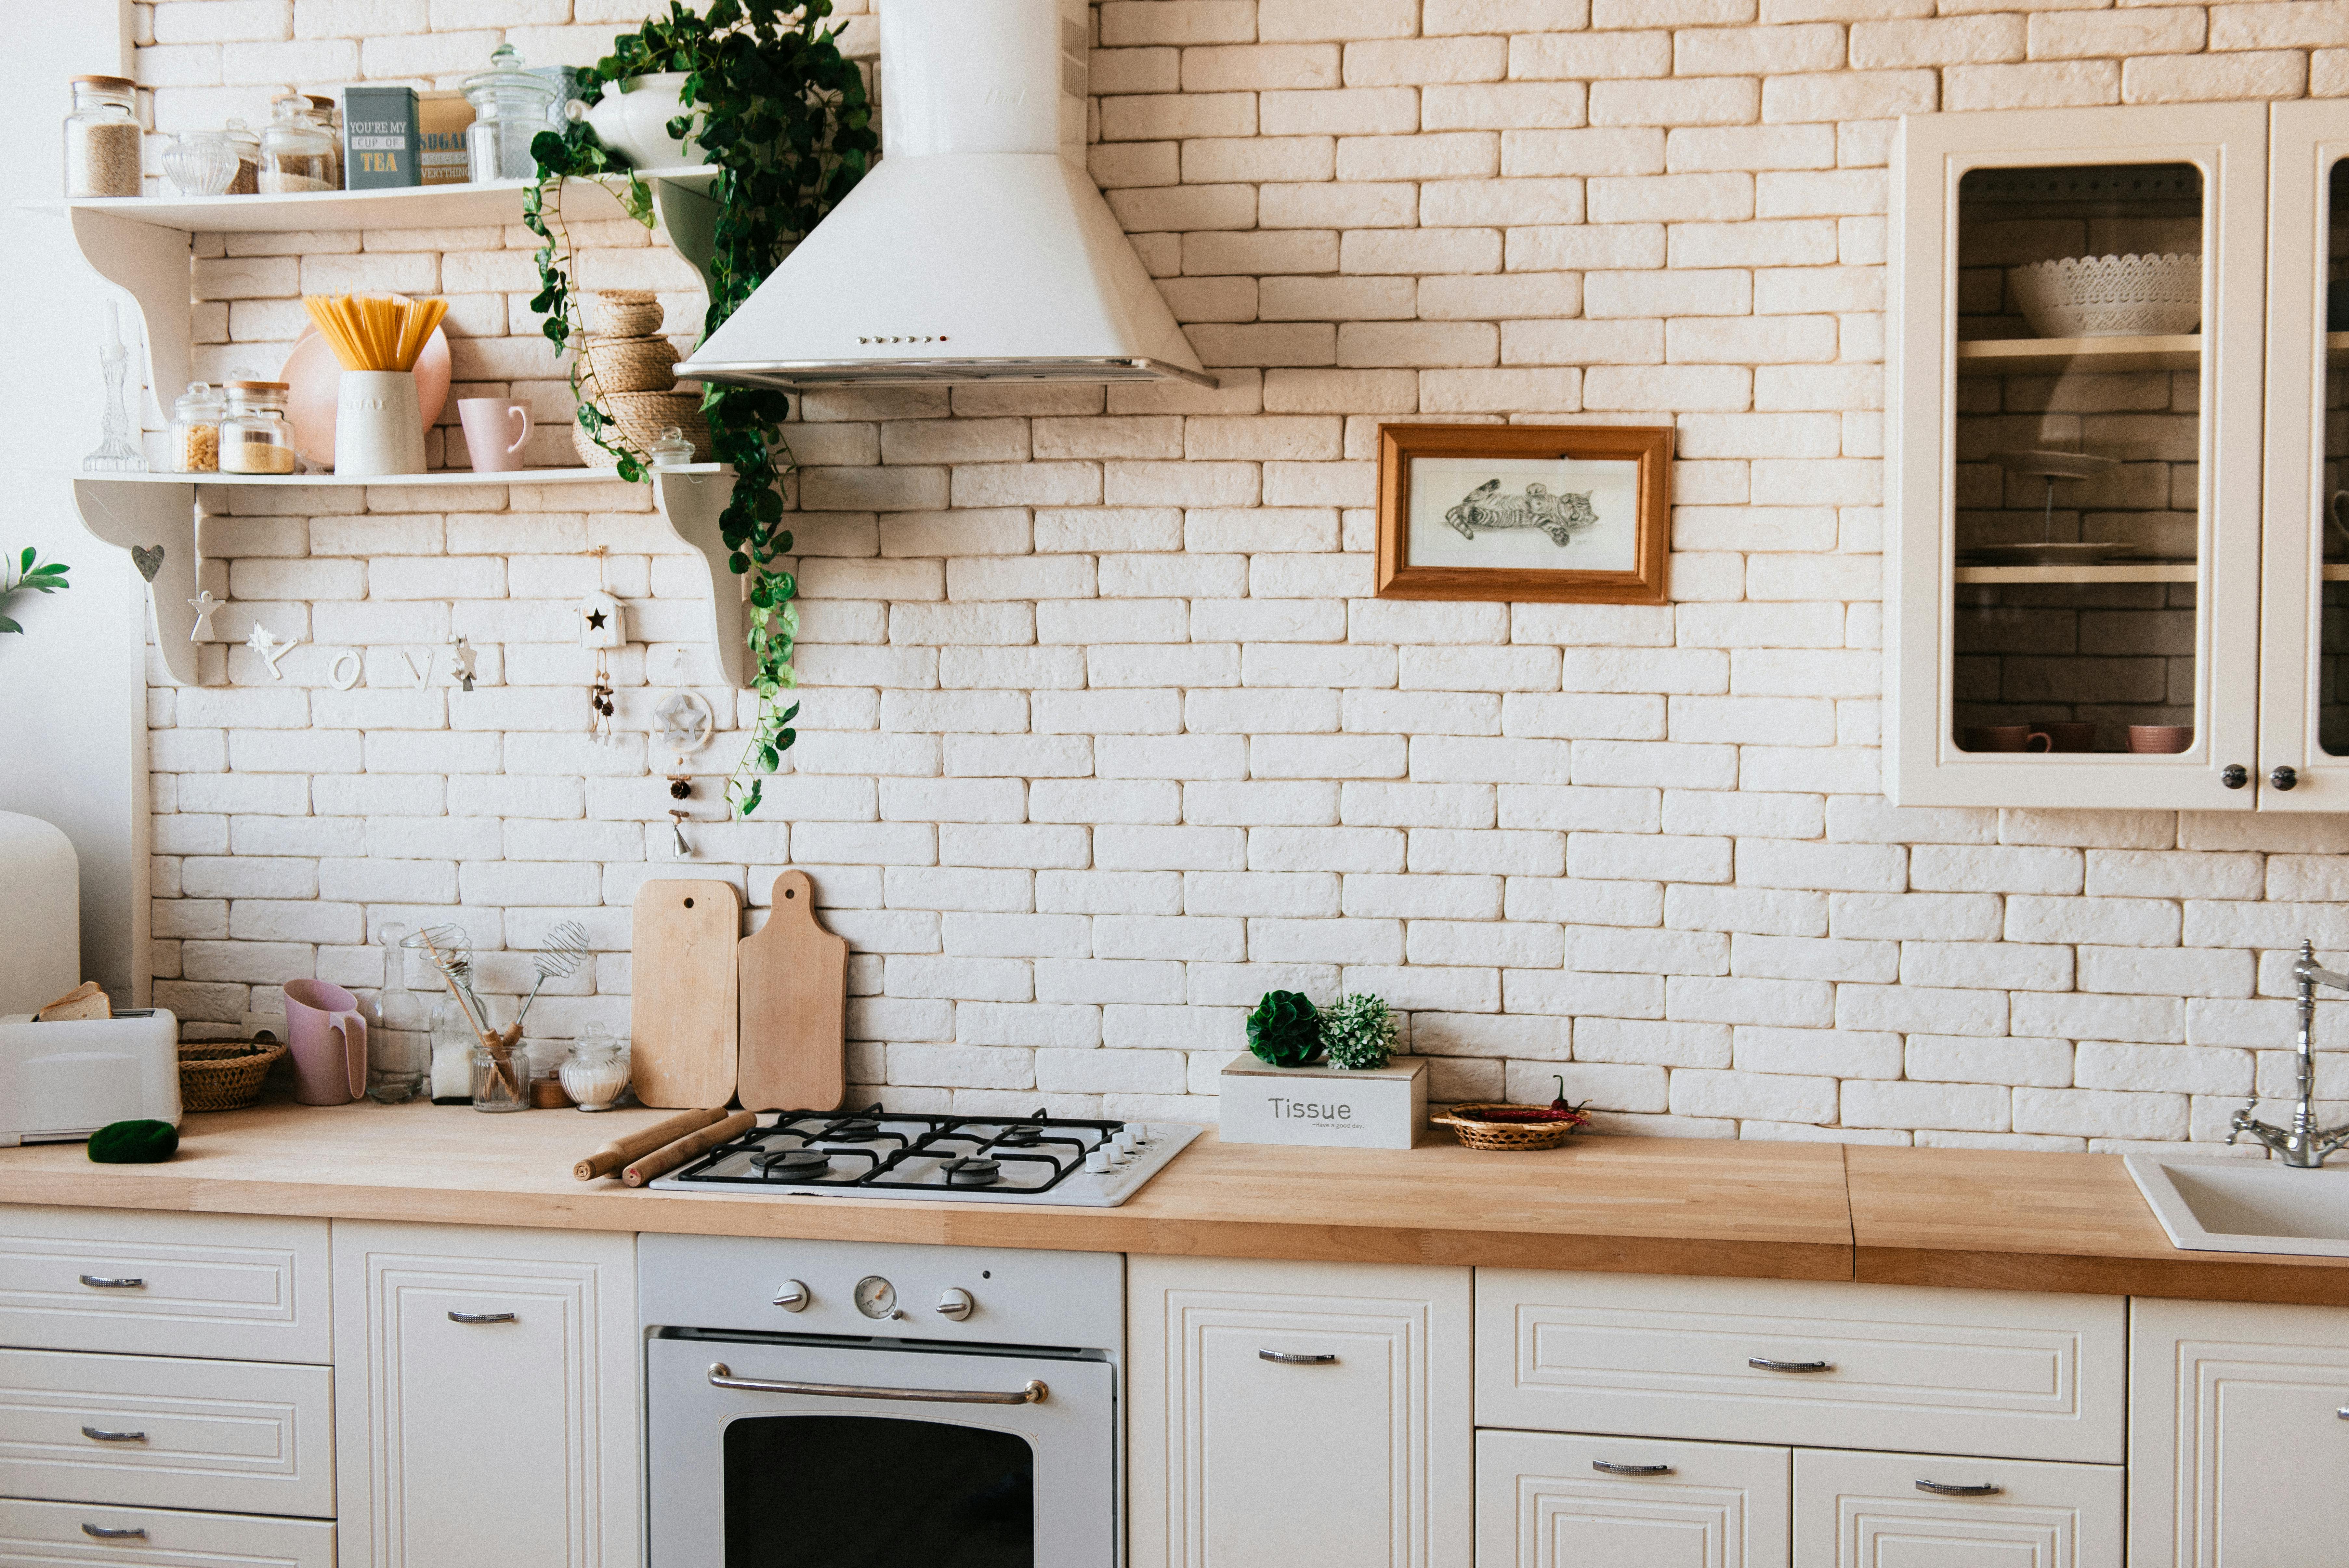 A kitchen | Source: Pexels